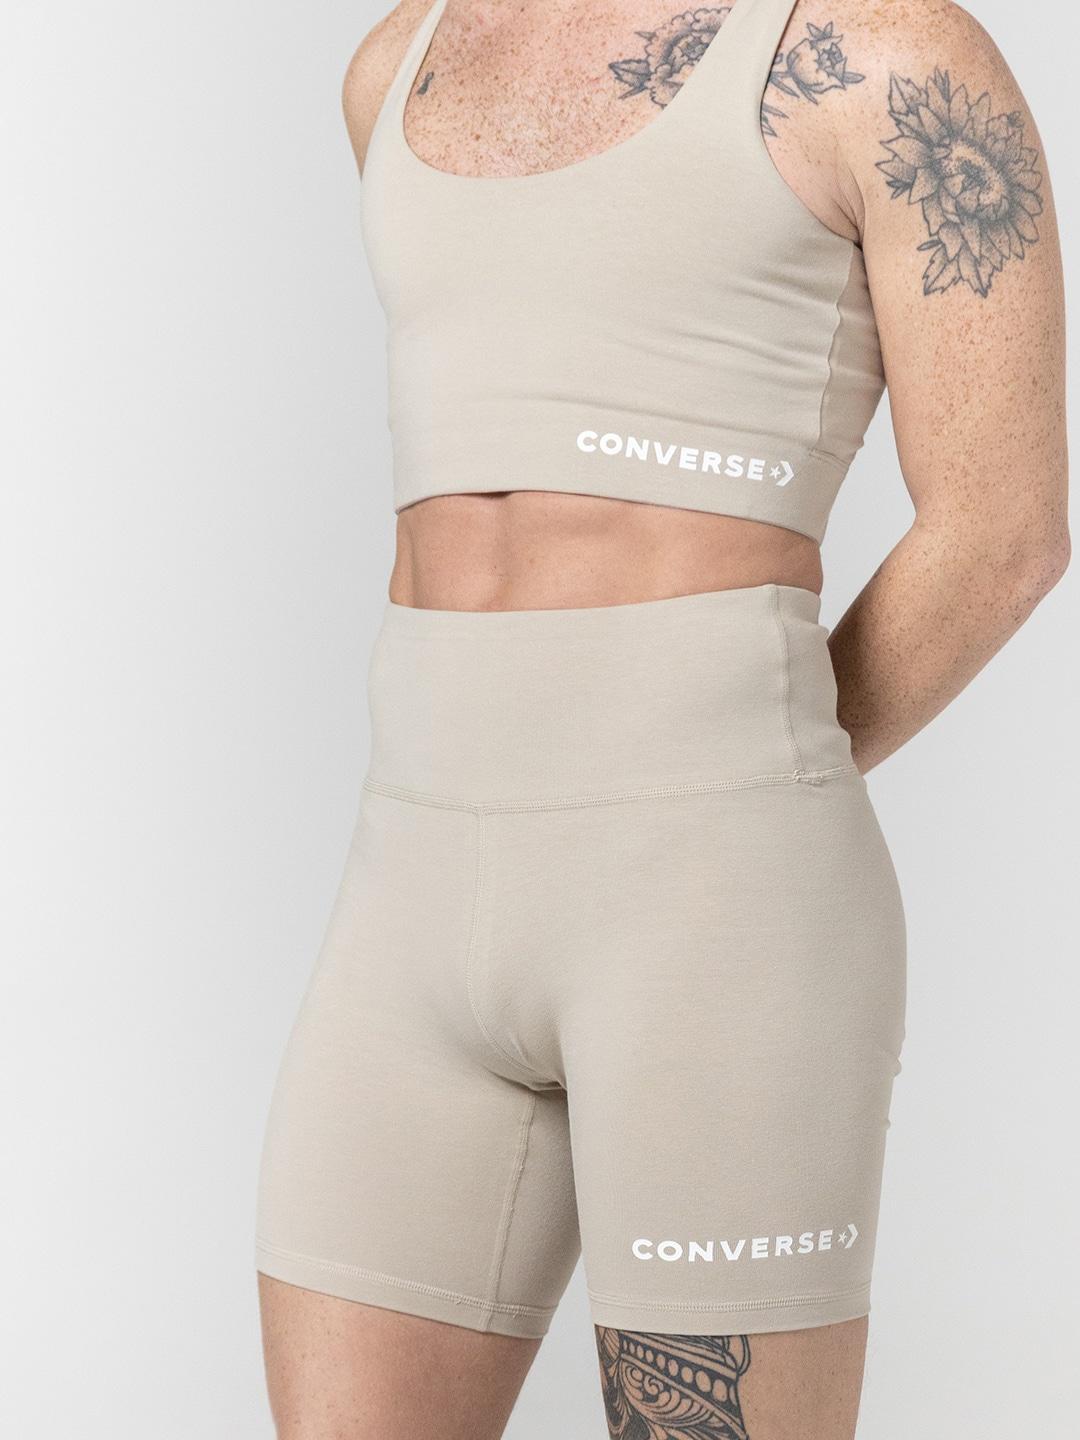 converse-women-high-rise-pure-cotton-sports-shorts